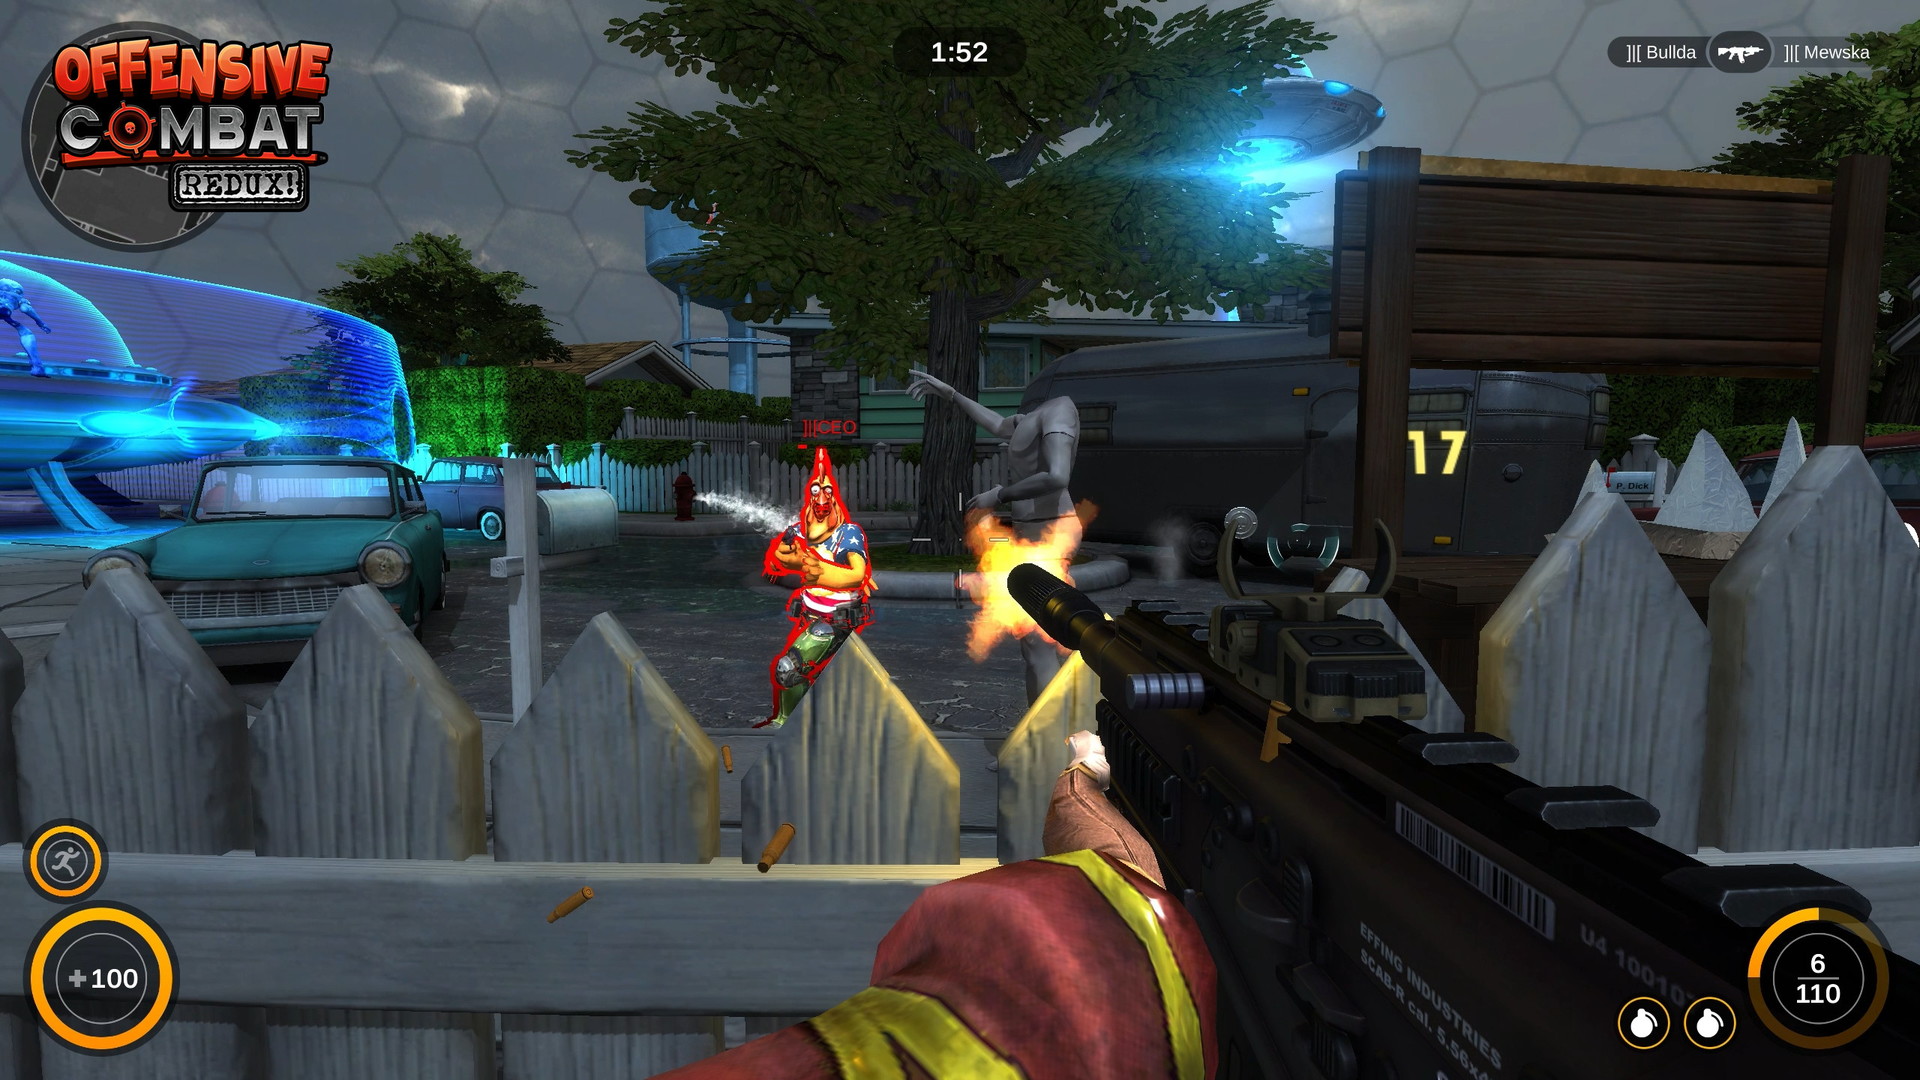 Offensive Combat: Redux! - screenshot 8